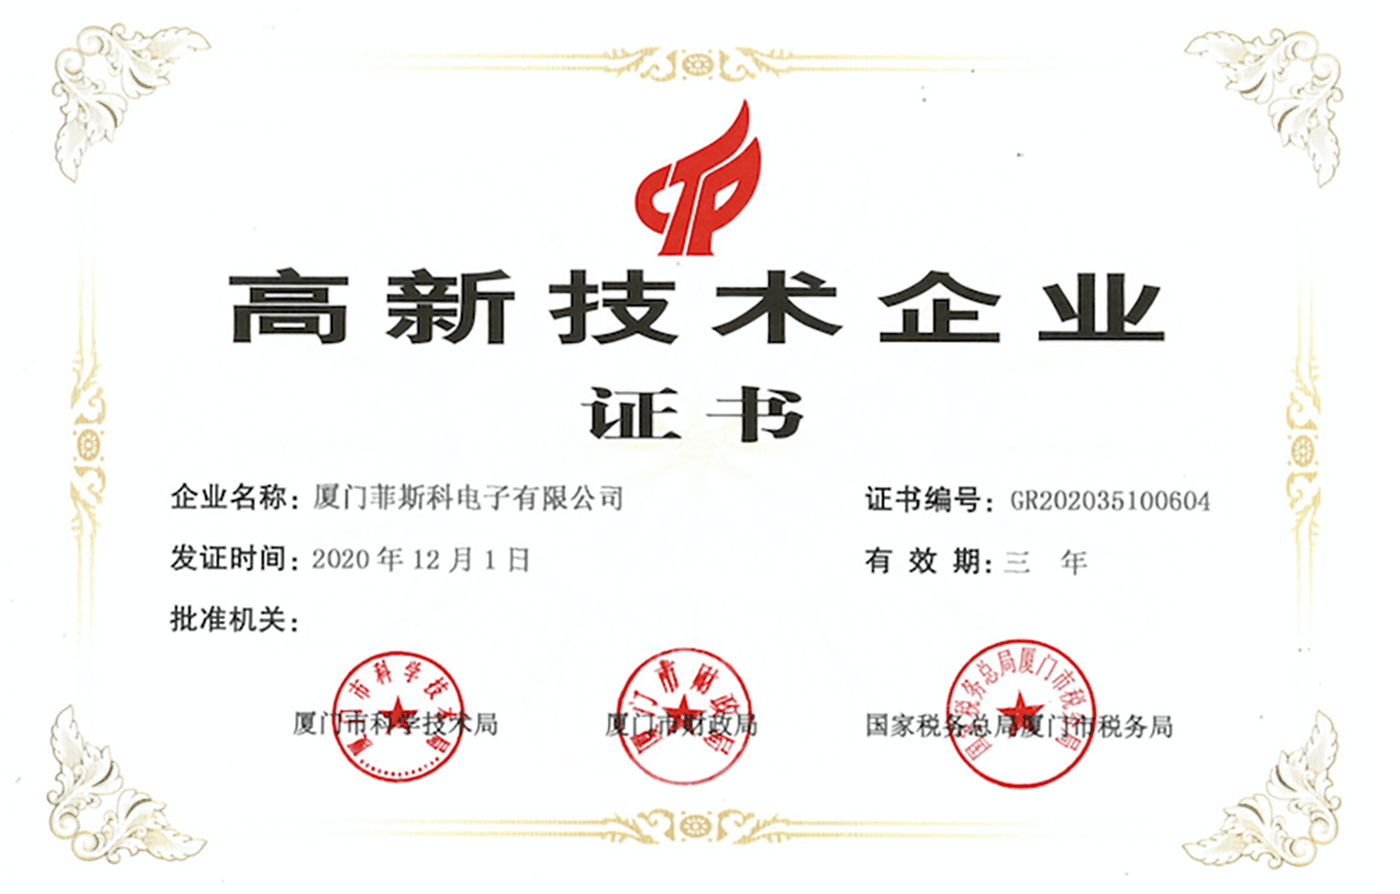 Certifikat for high-tech enterprise.png